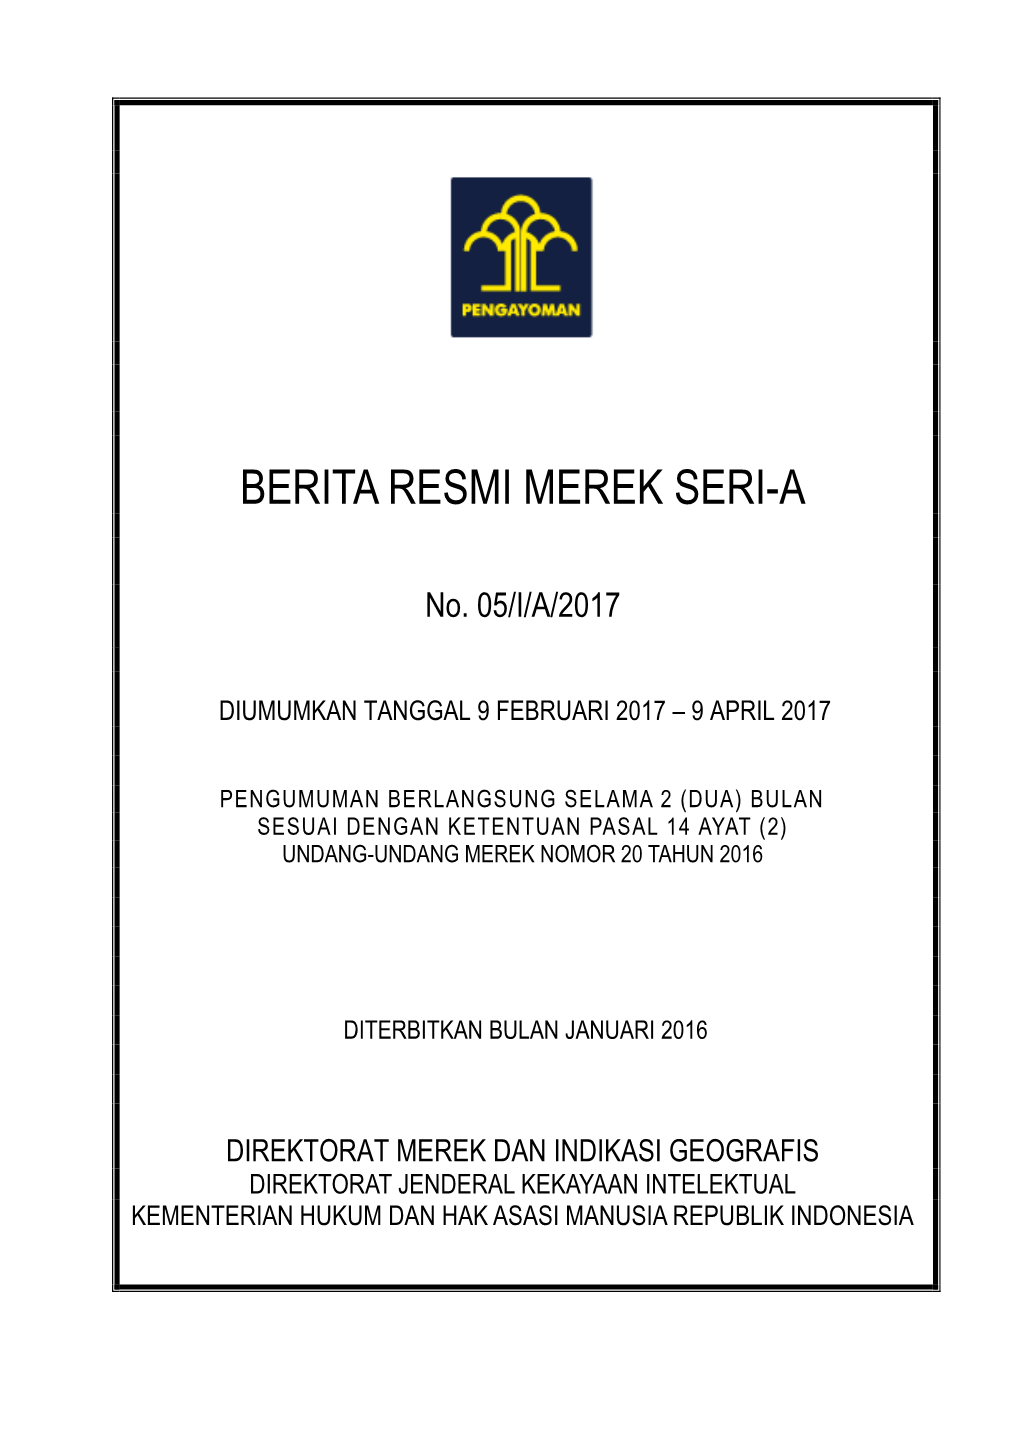 Berita Resmi Merek No. 05/I/A/2017